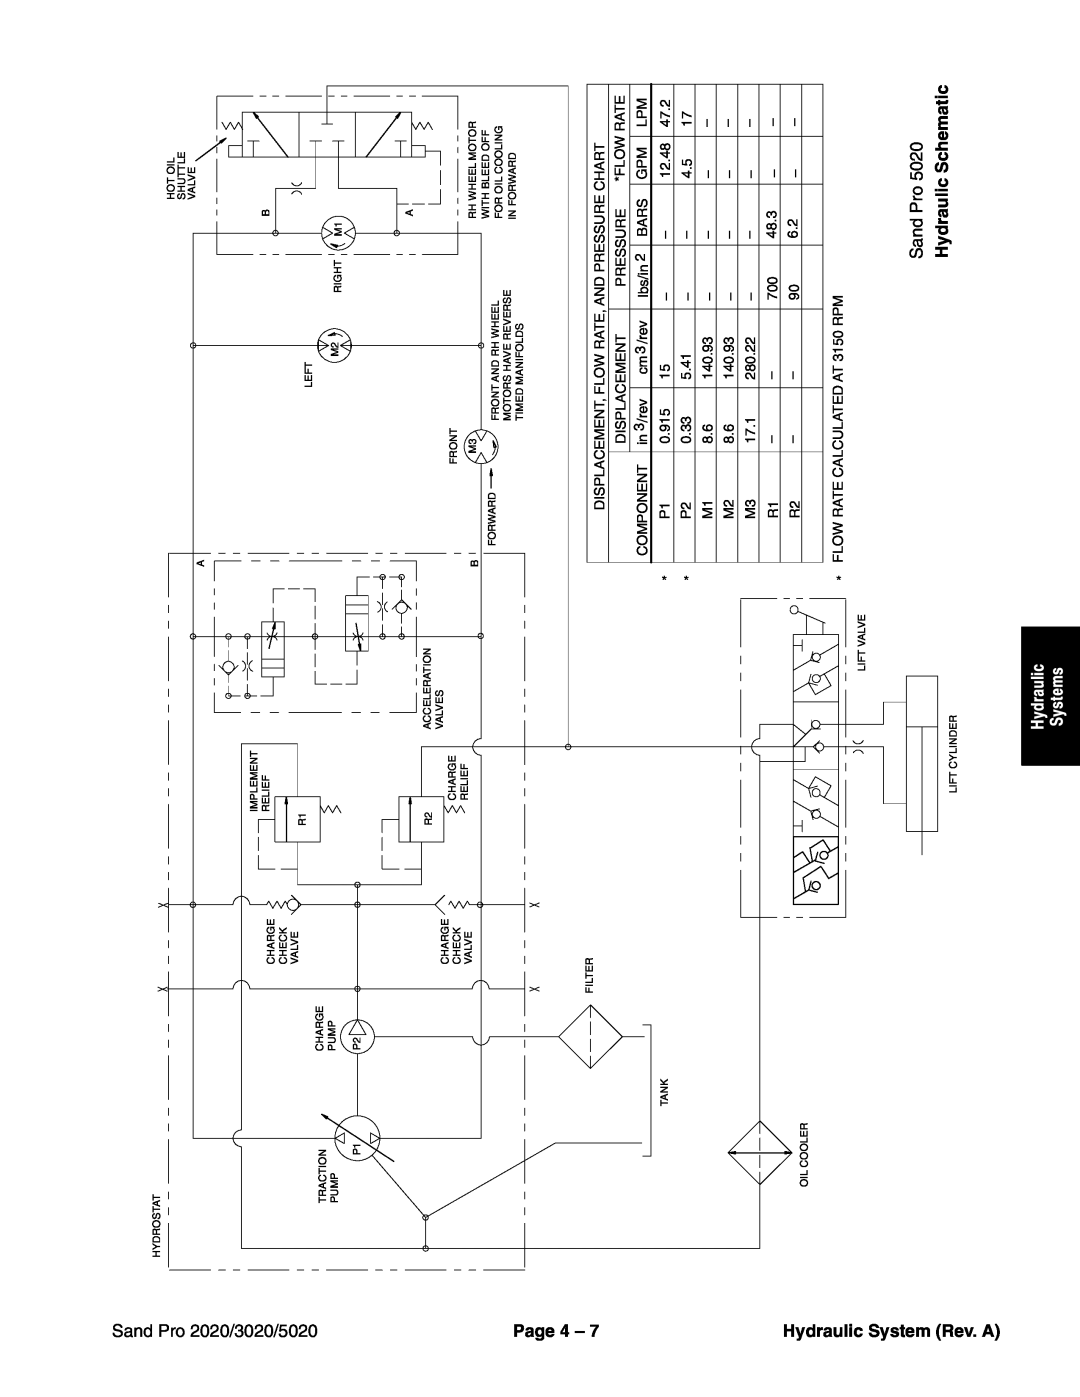 Toro 5020, 2020, 3020 service manual Rev. A, Hydraulic Schematic, Hydraulic Systems, Page 4 